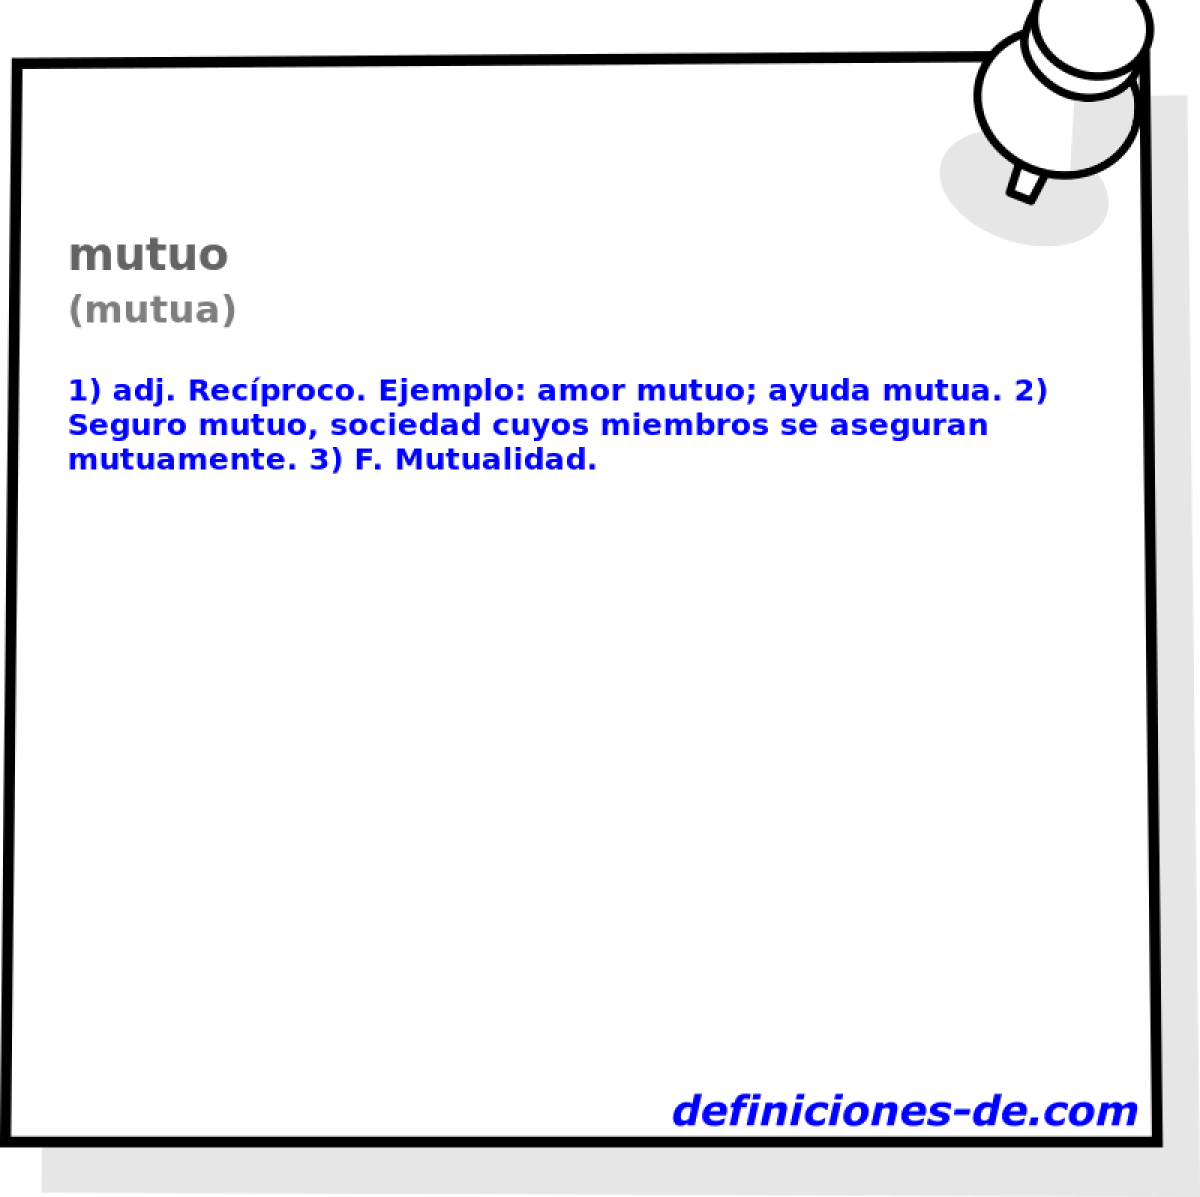 mutuo (mutua)